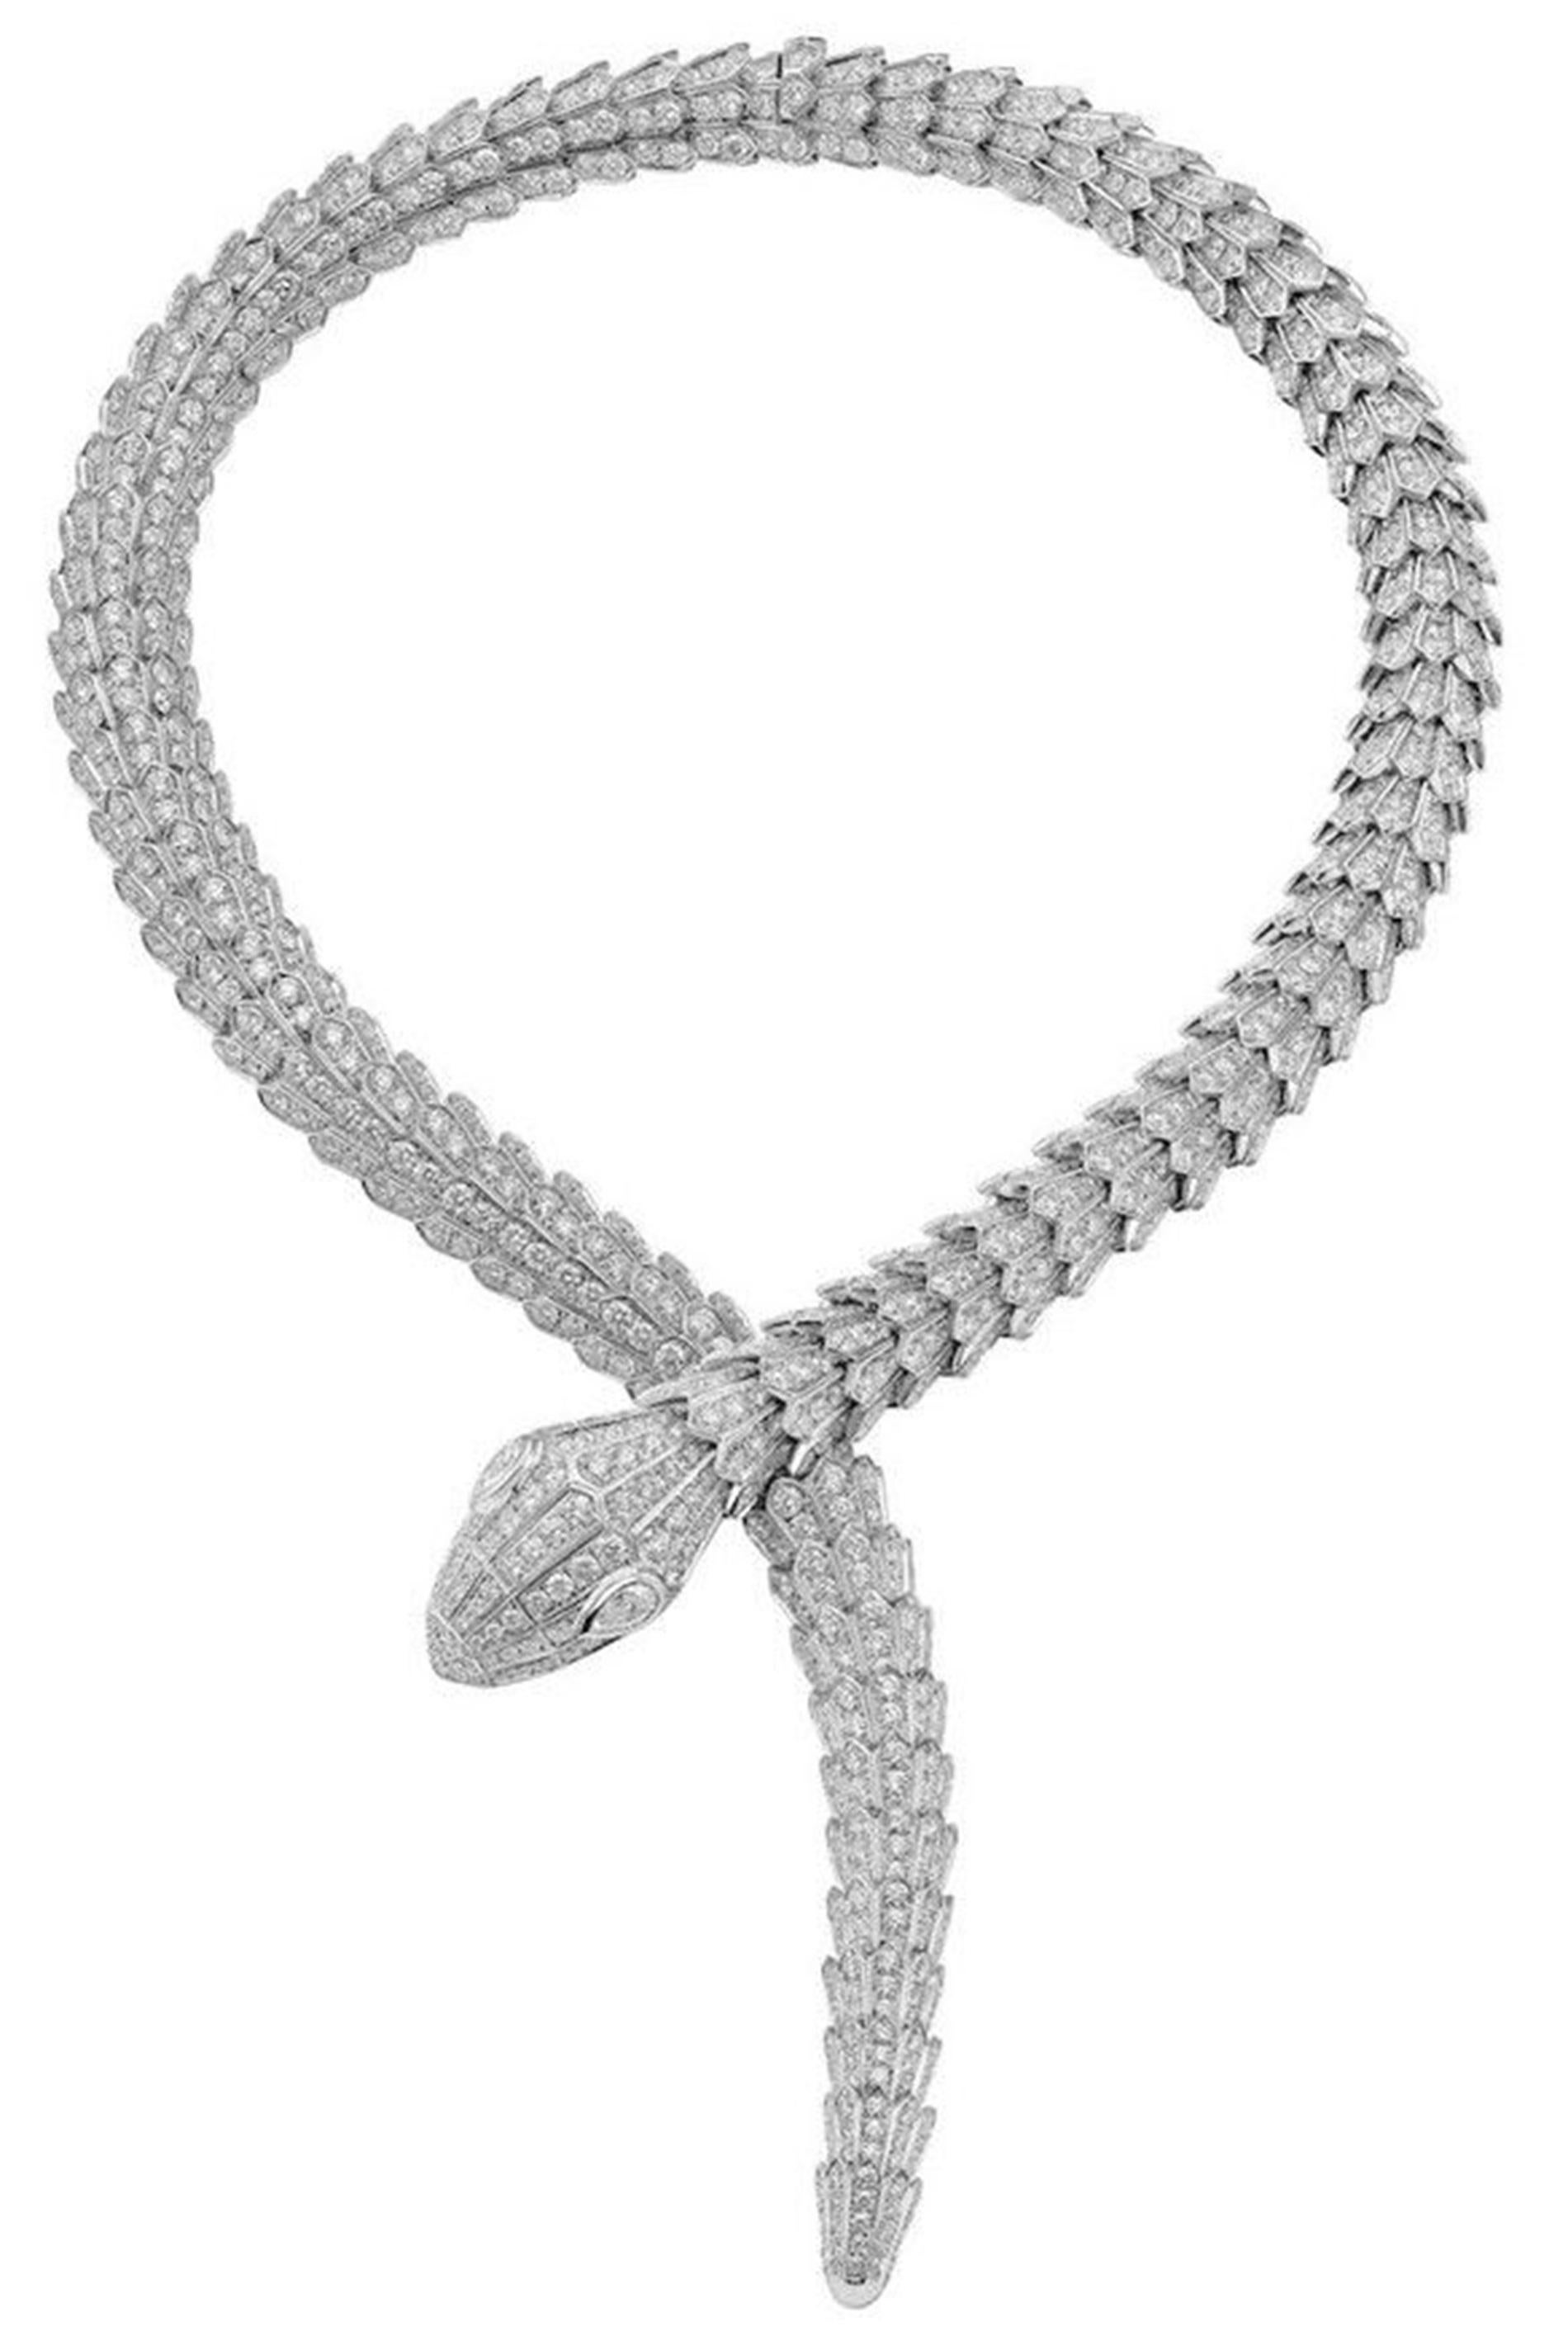 Taille ronde Bvlgari Serpenti Collier enveloppant de diamants en vente